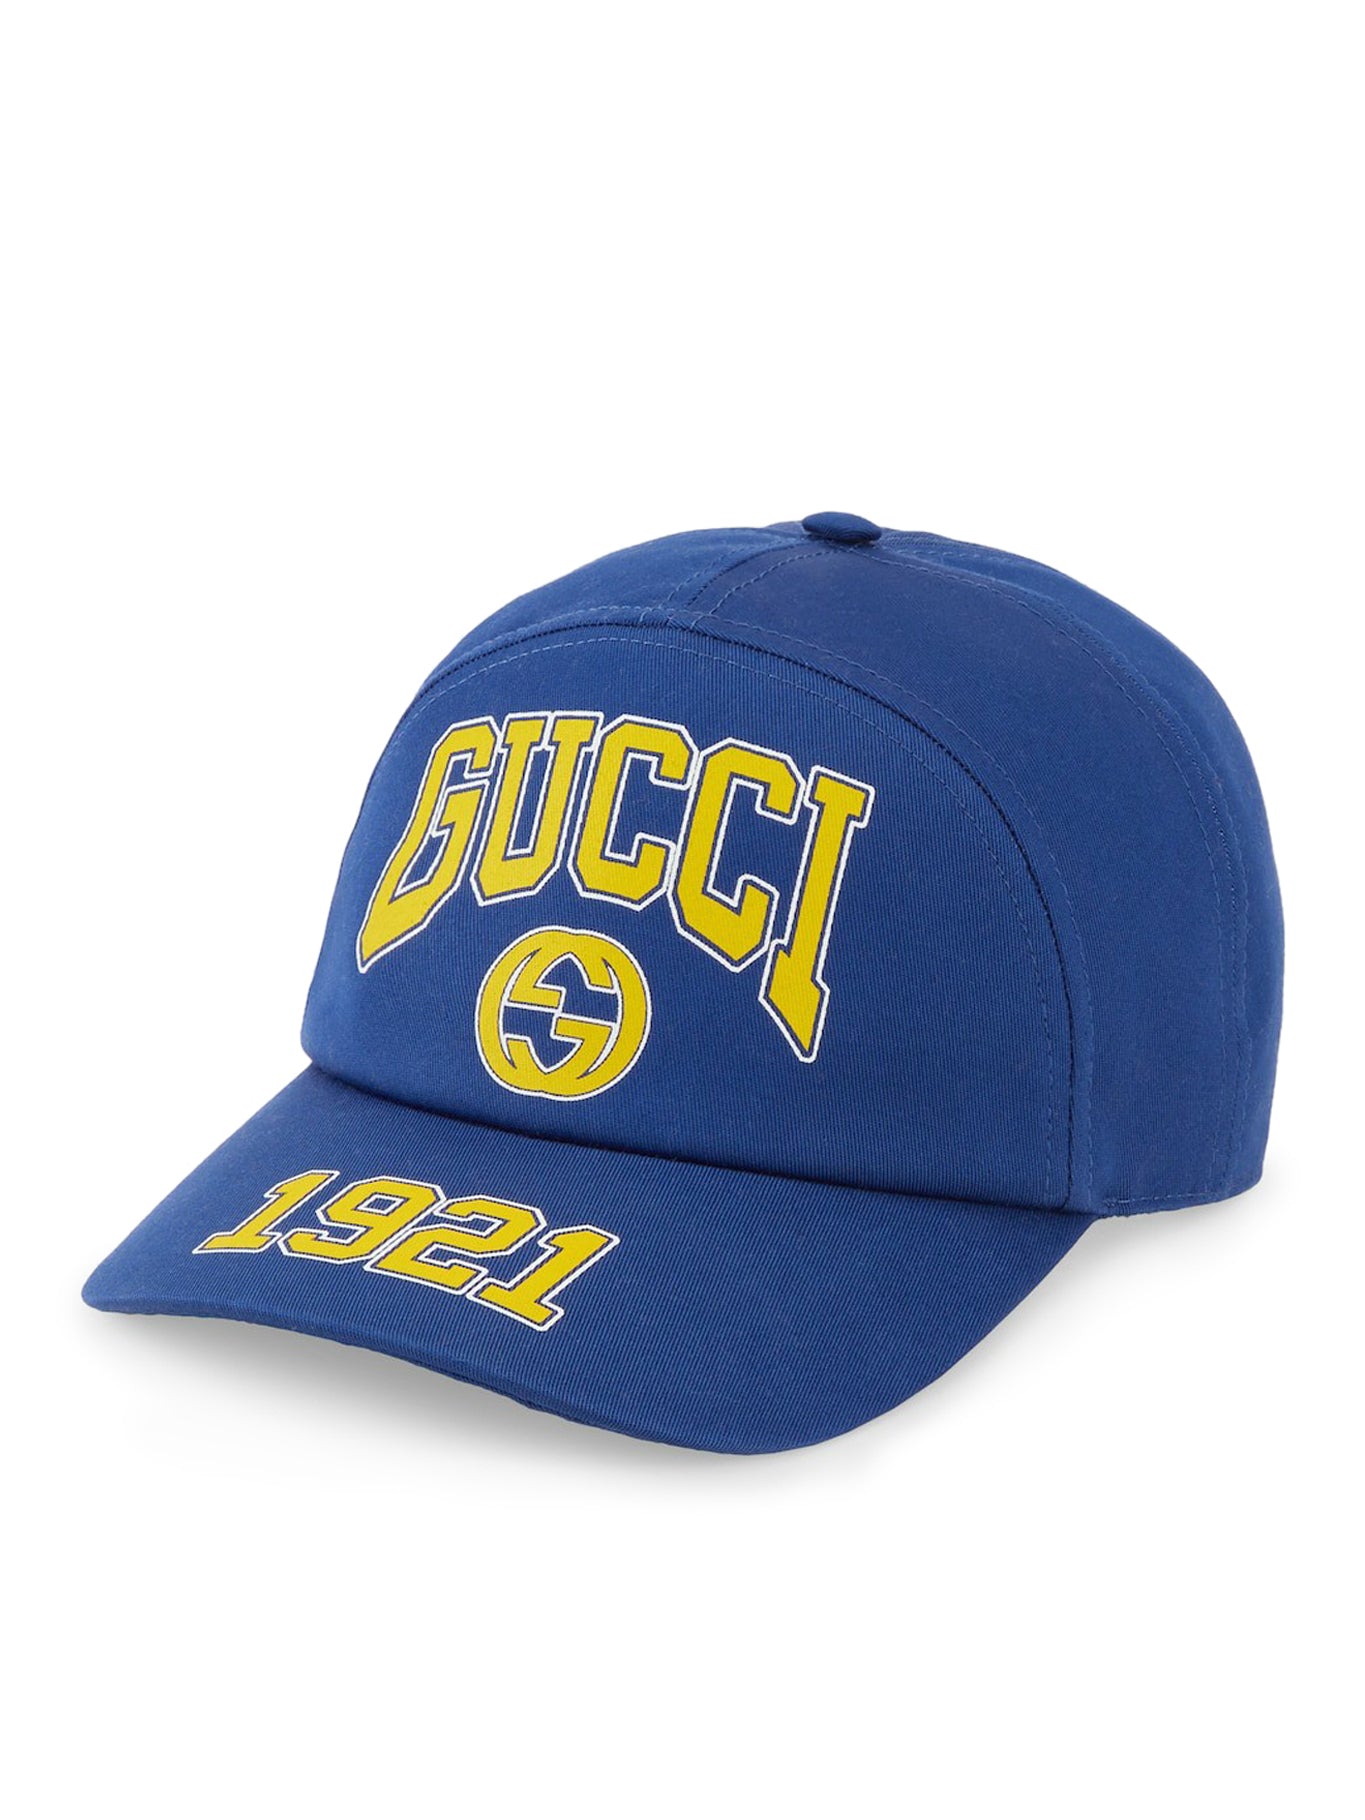 GUCCI COTTON BASEBALL CAP